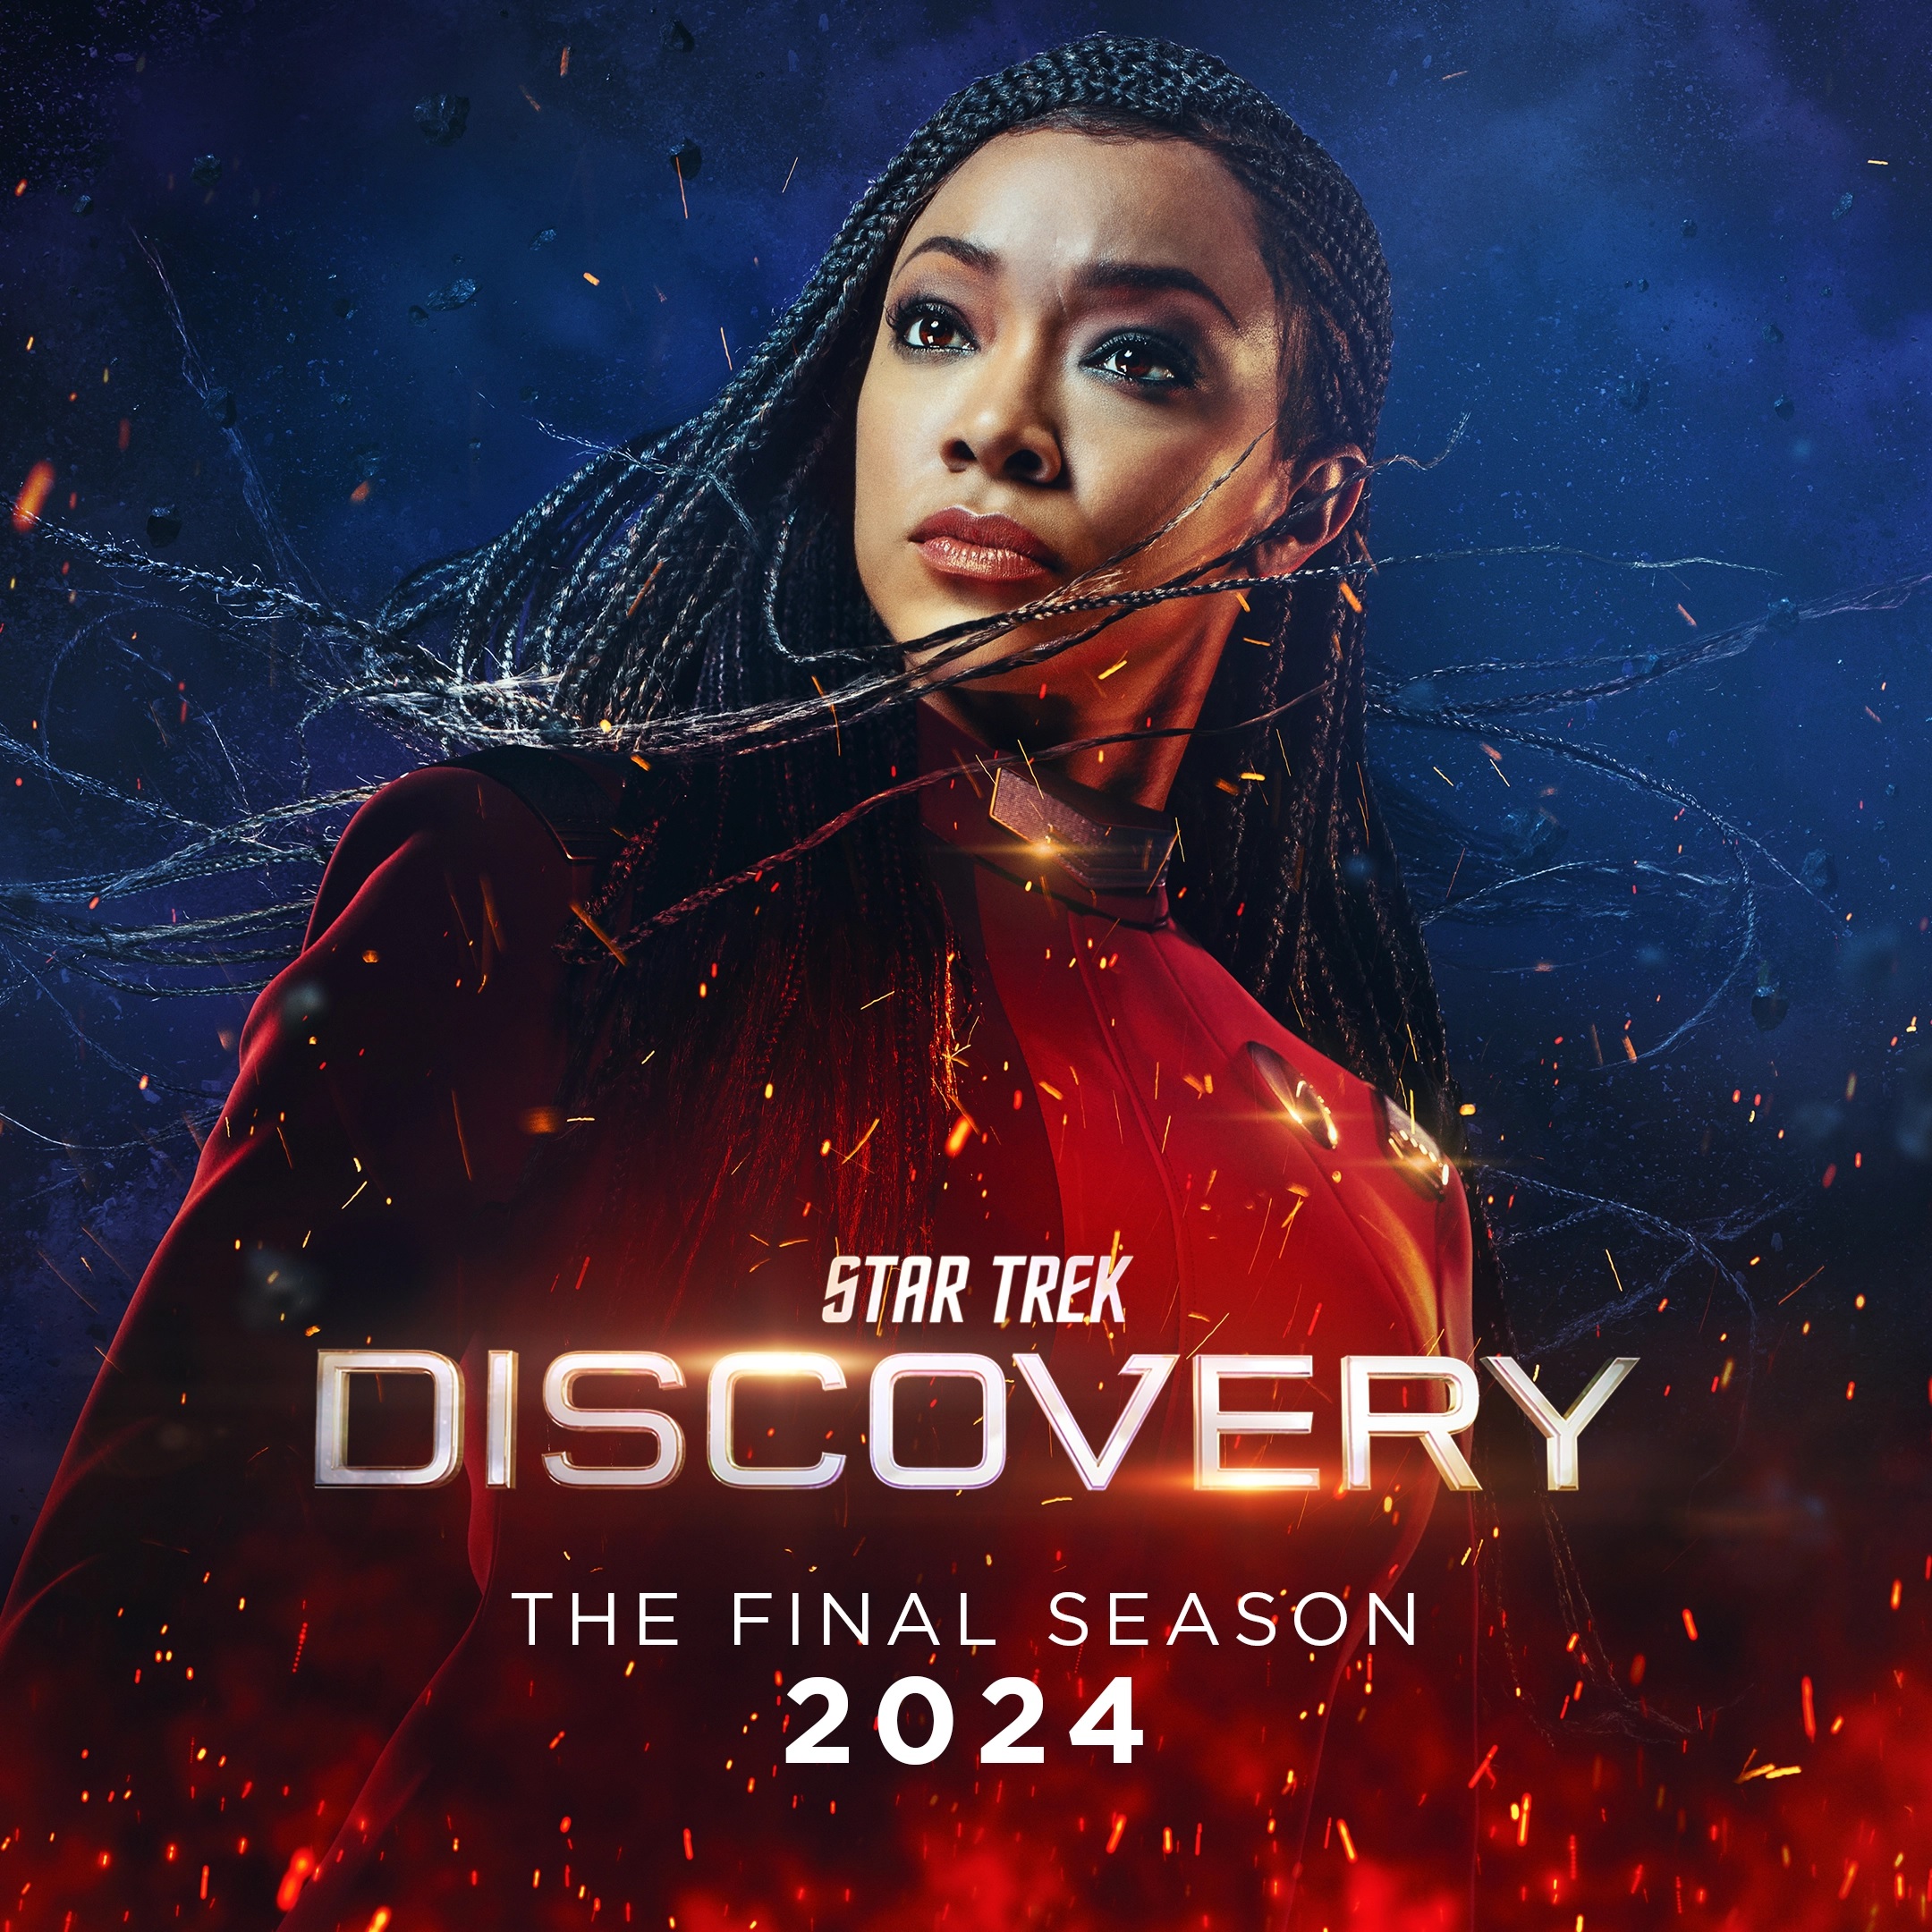 is star trek discovery season 5